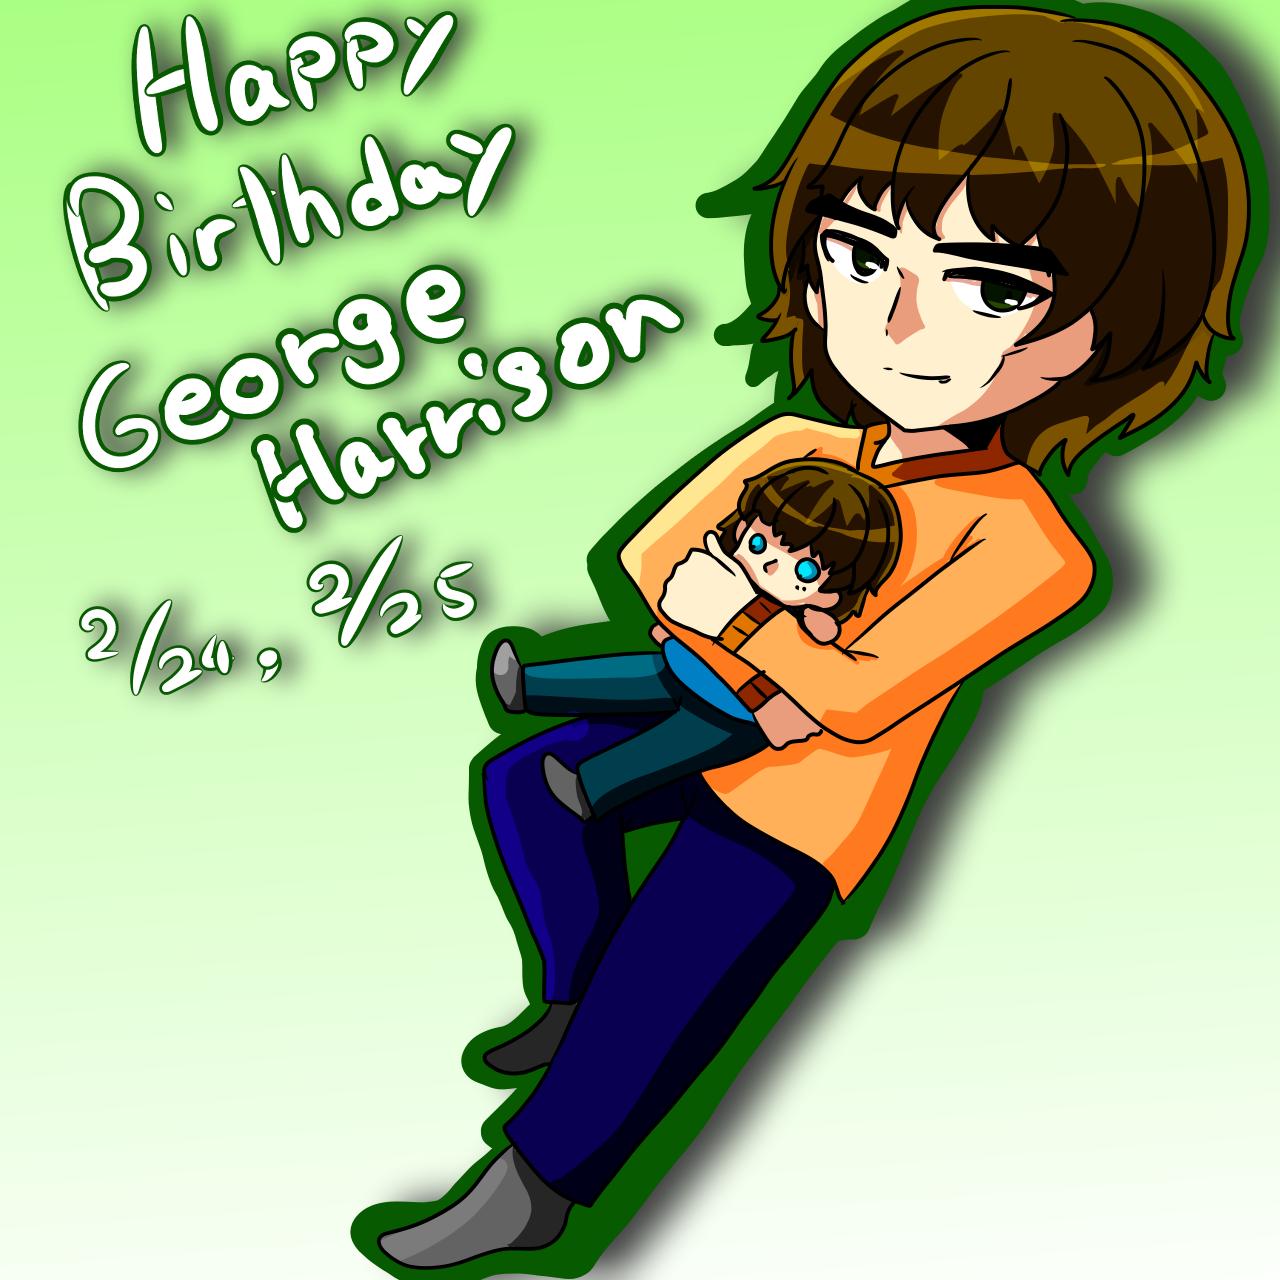 Happy Birthday George Harrison! 